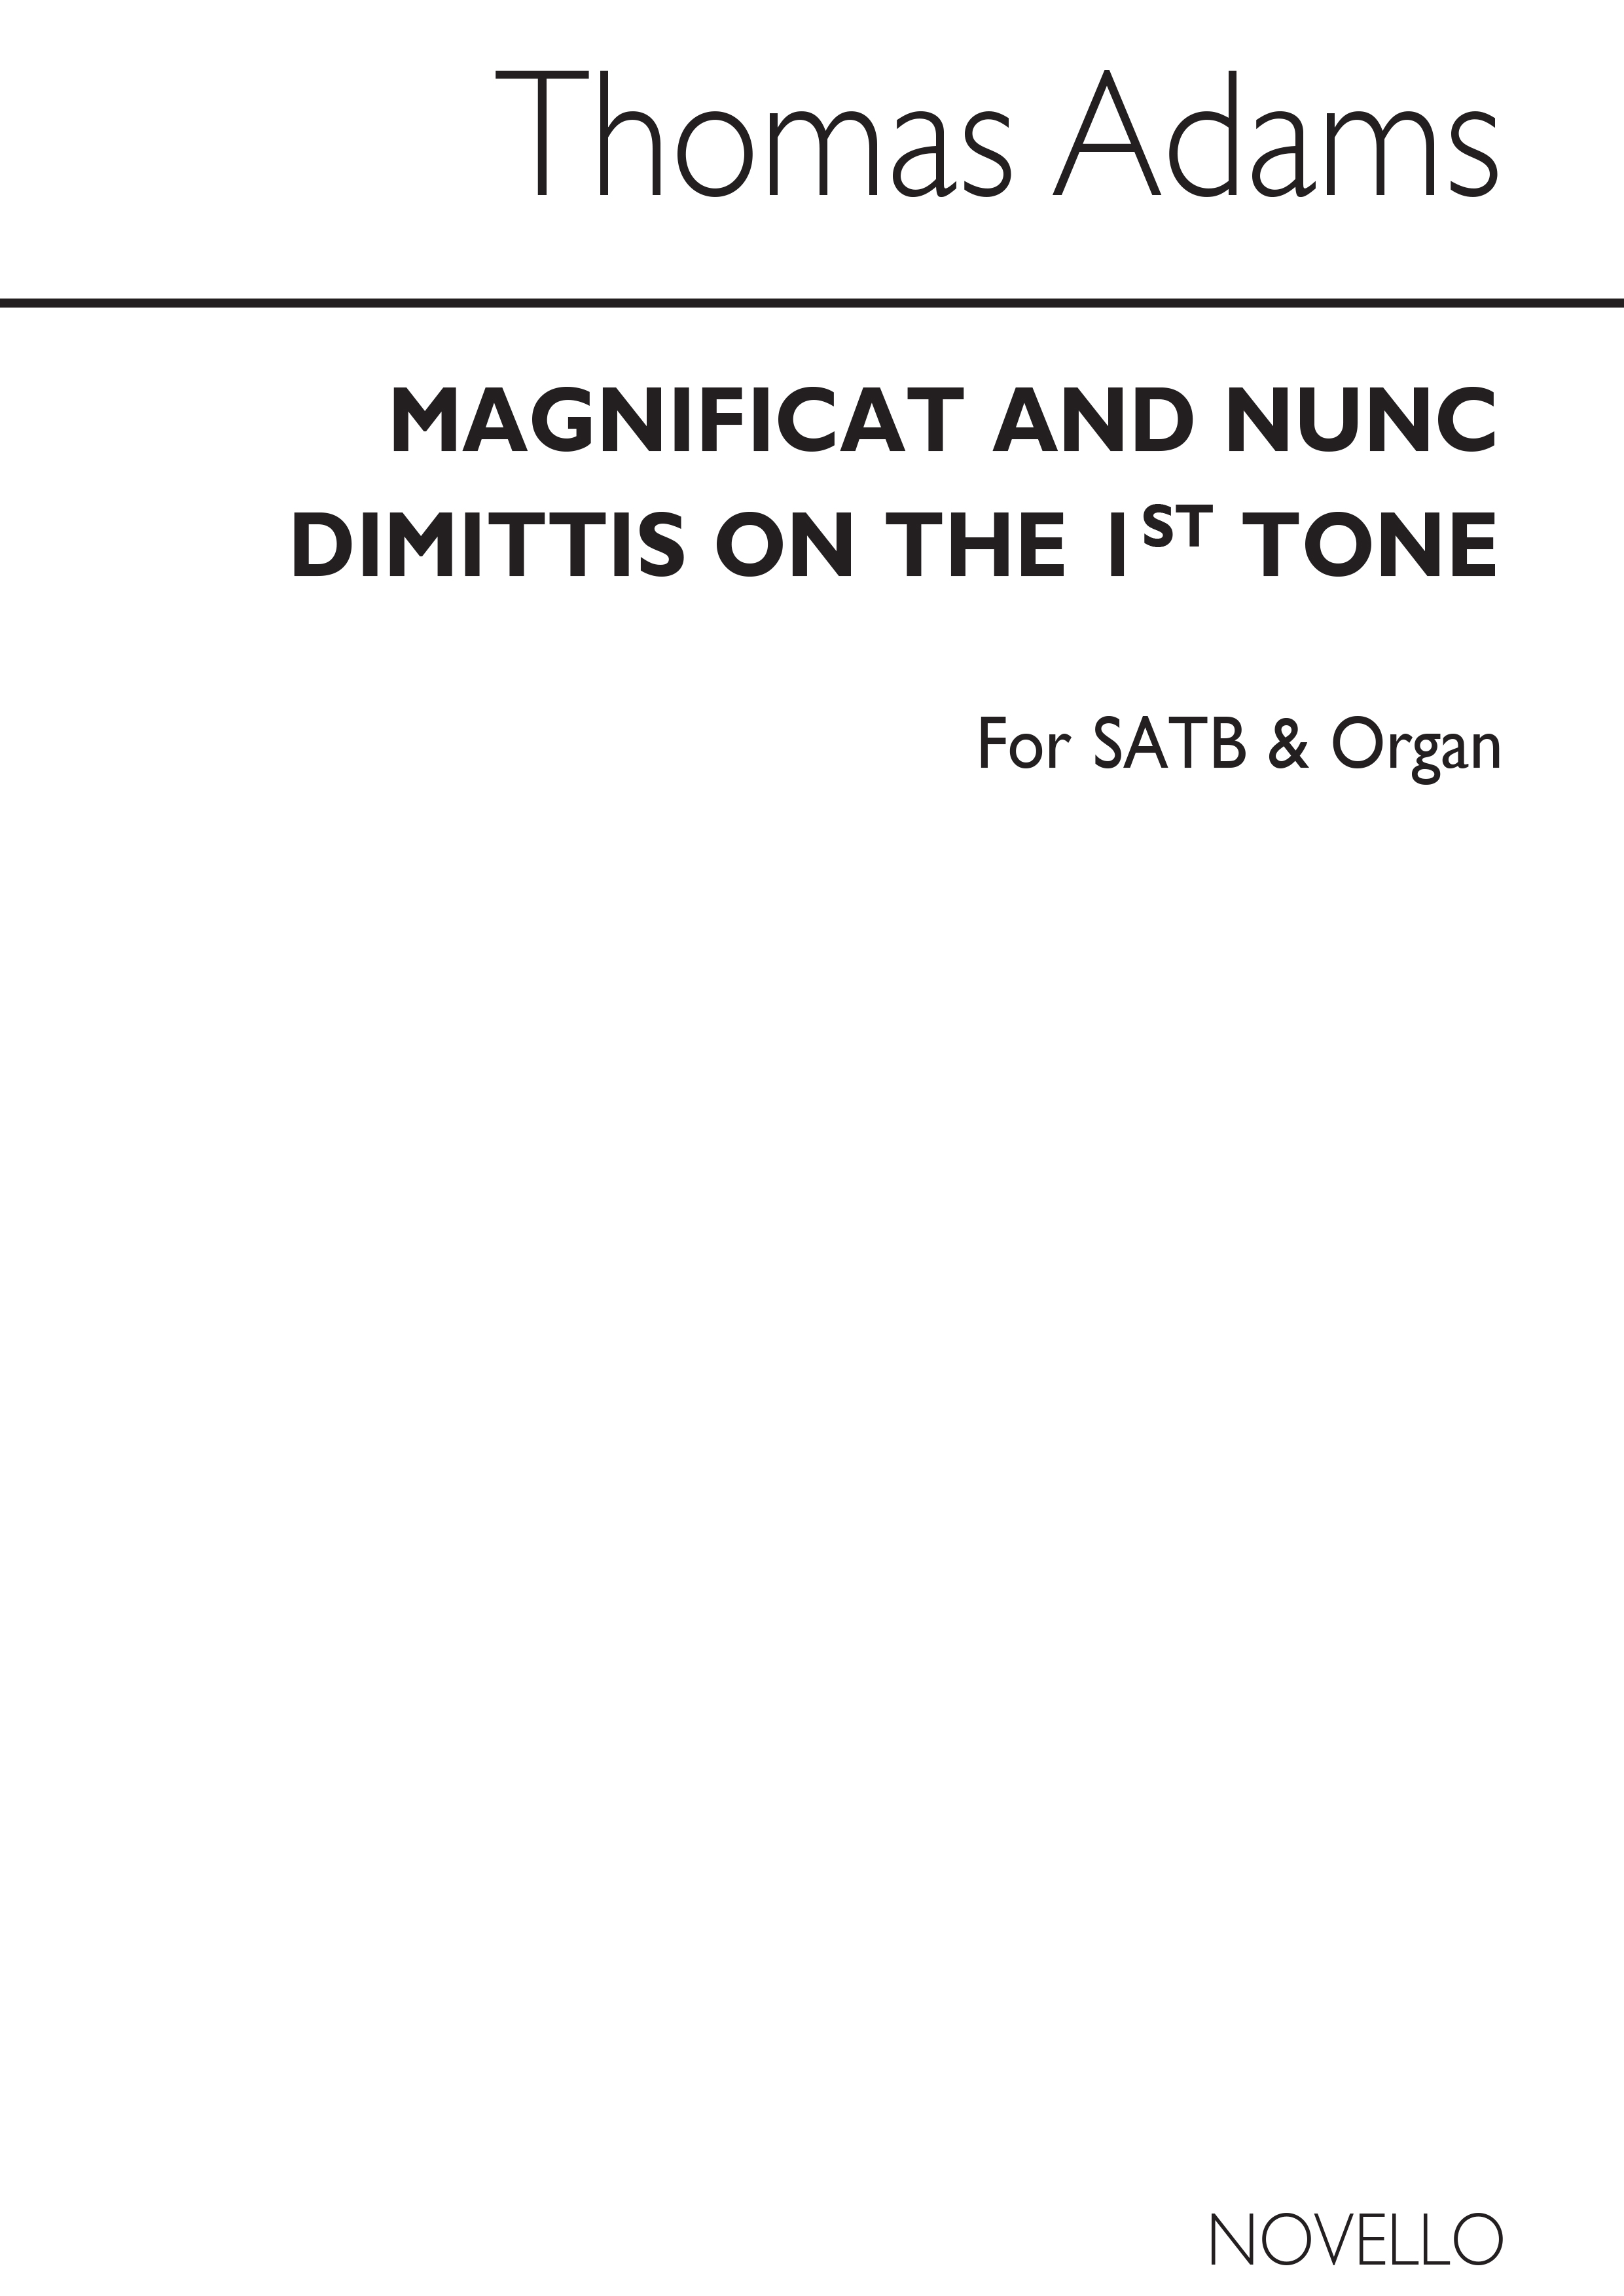 Thomas Adams: Magnificat&nunc Dimittis(Greg.Tones-1st Tone,5th Ending)satb/Org